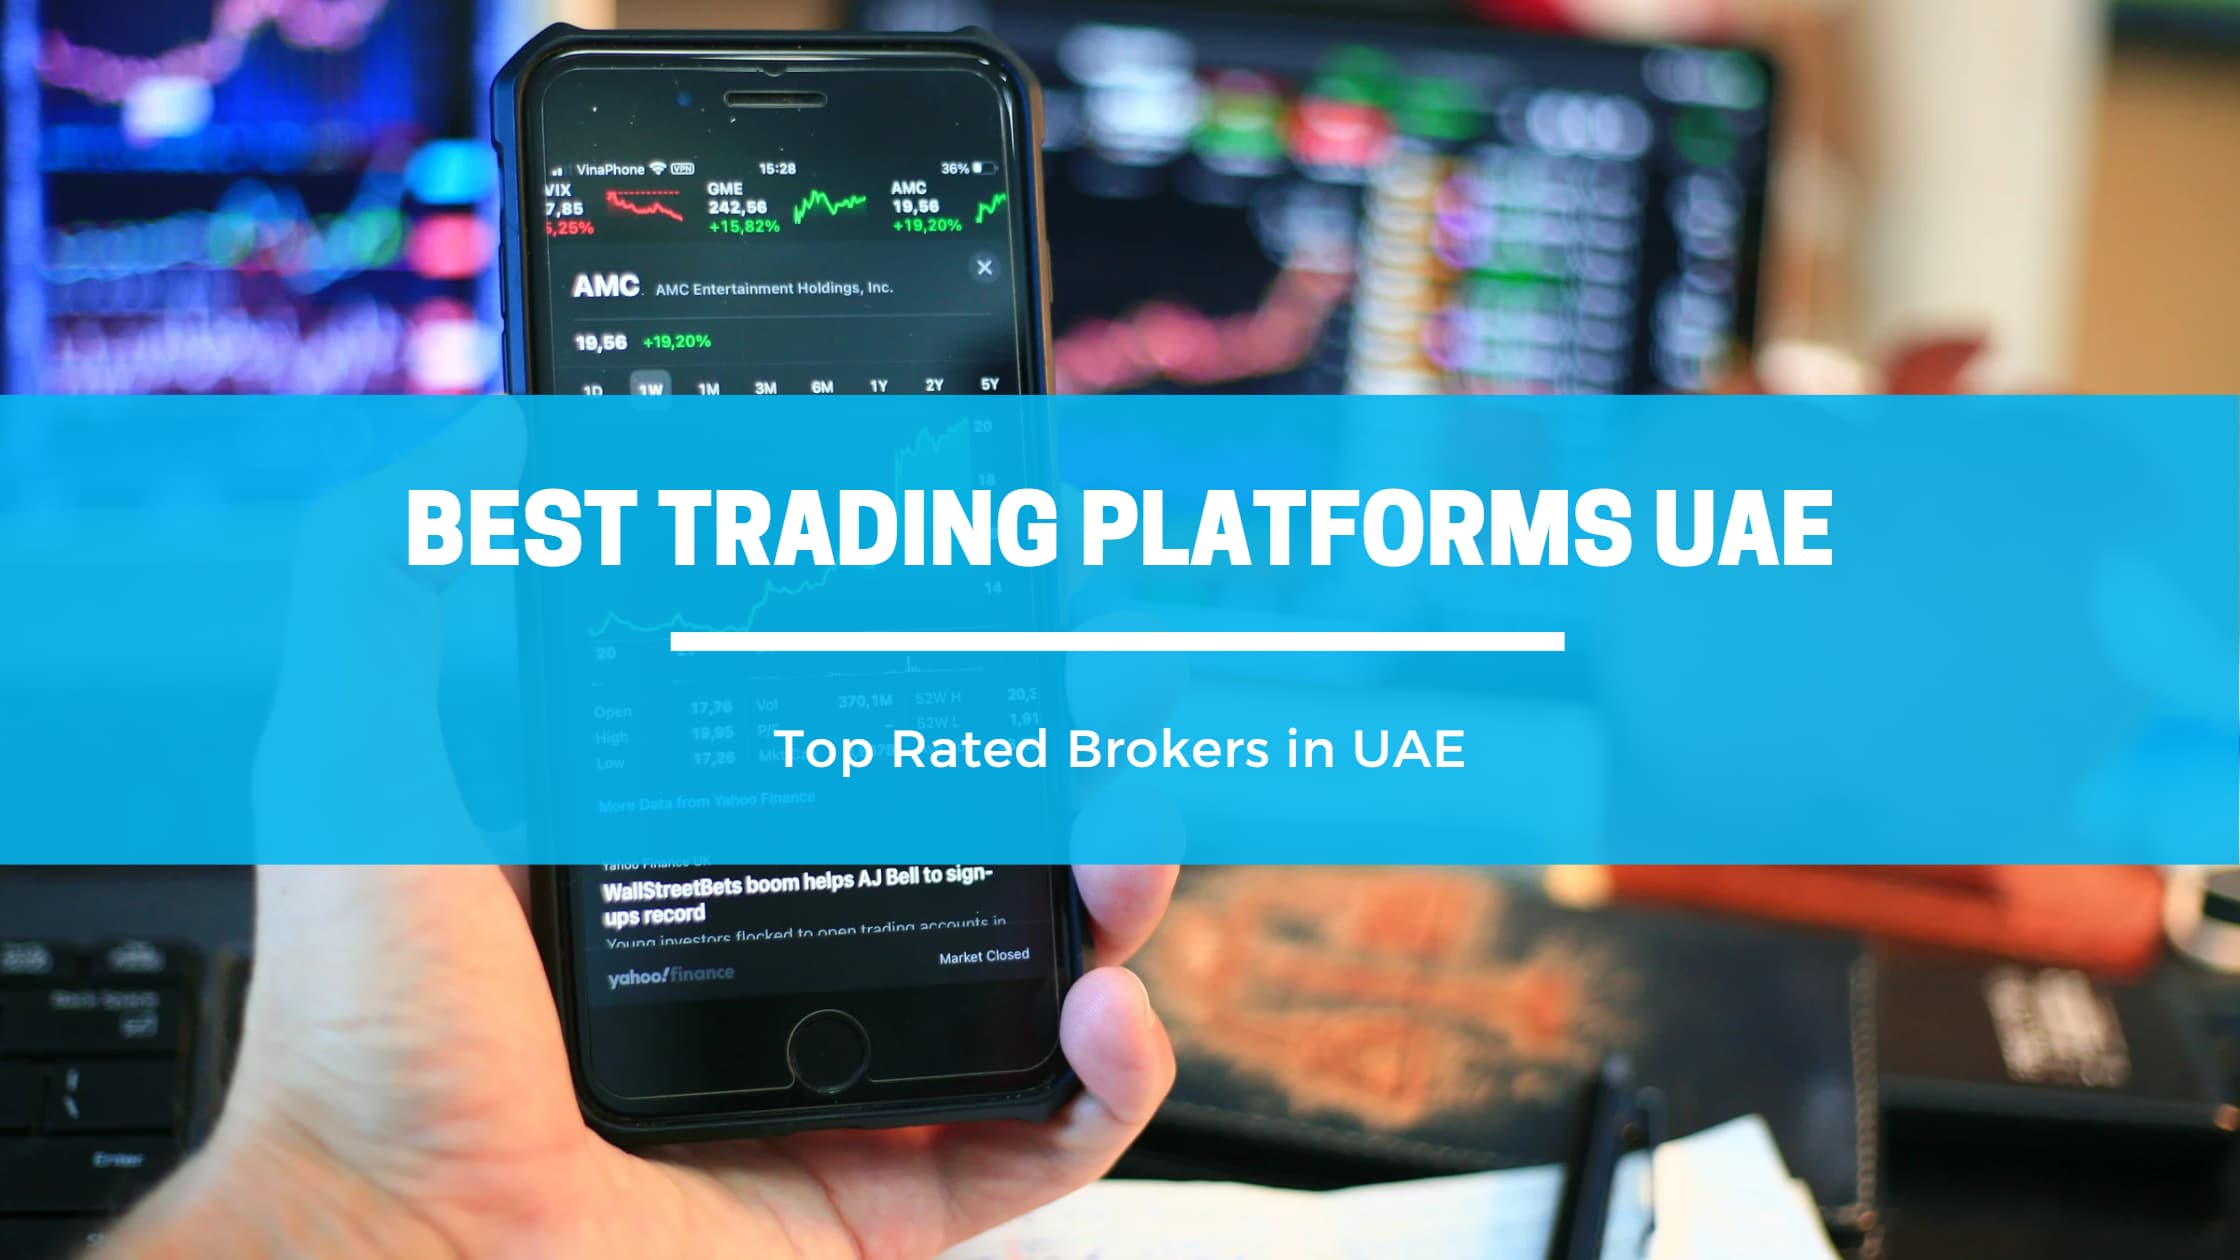 UAE Commodity Trading Platforms